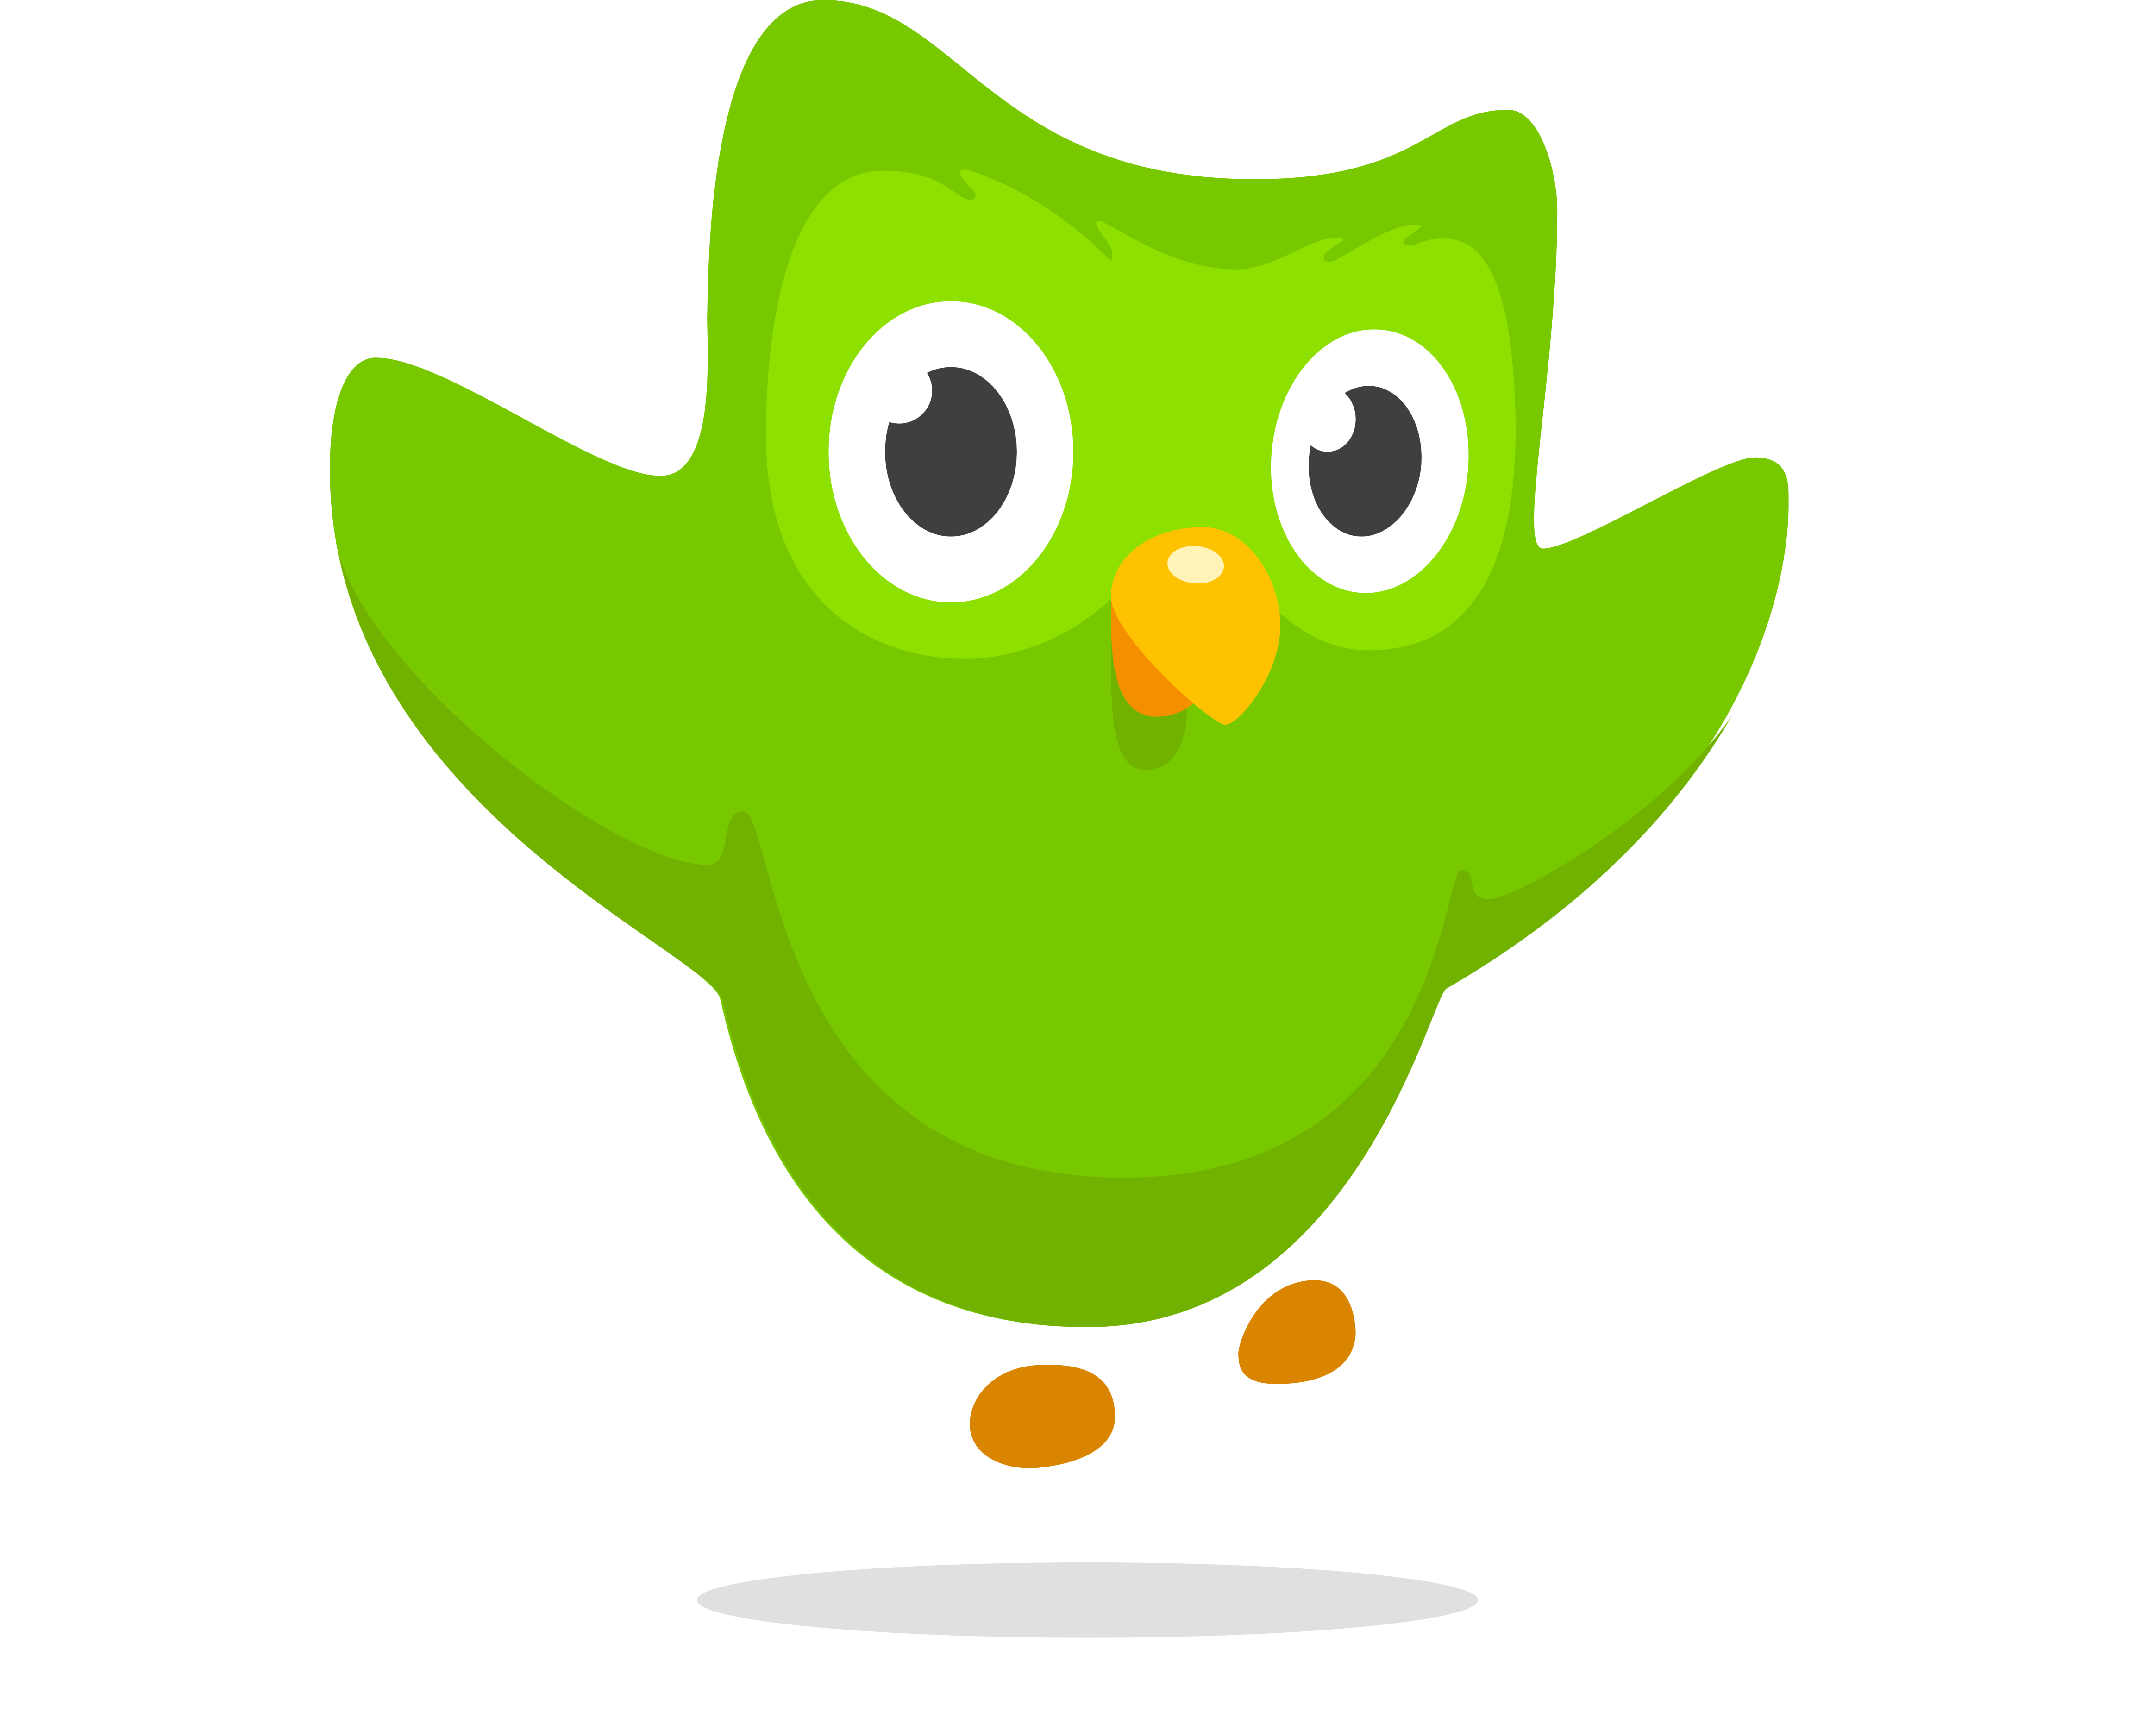 Duolingo learn. Дуолинго. Персонажи из Duolingo. Совенок Дуолинго. Duolingo аватарка.